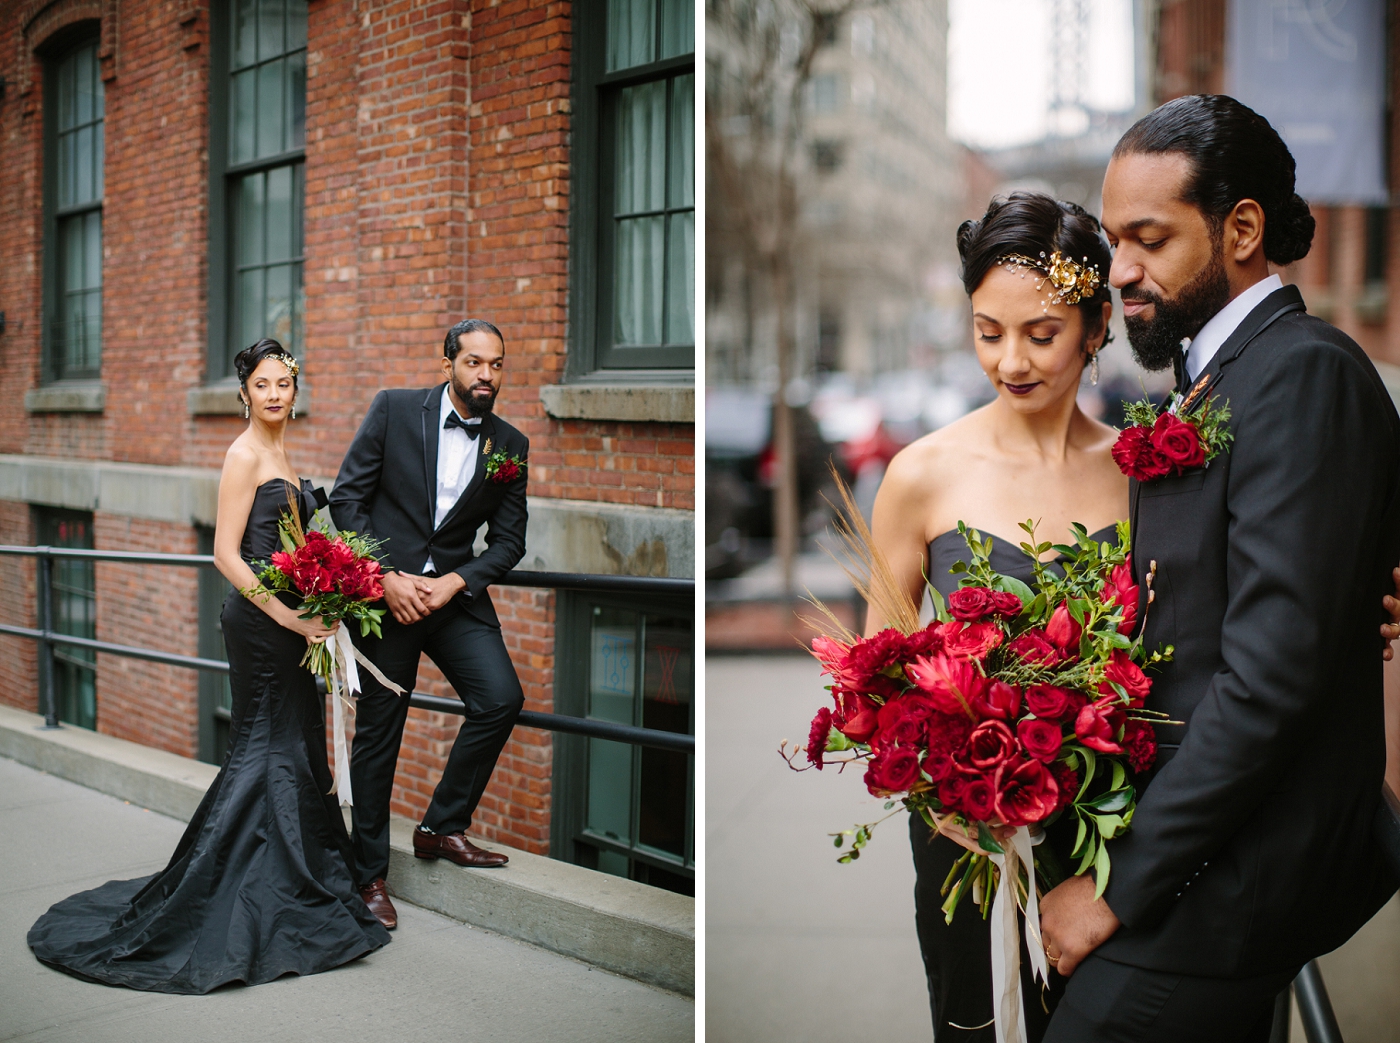 New York City wedding photos by Samantha Clarke Photography